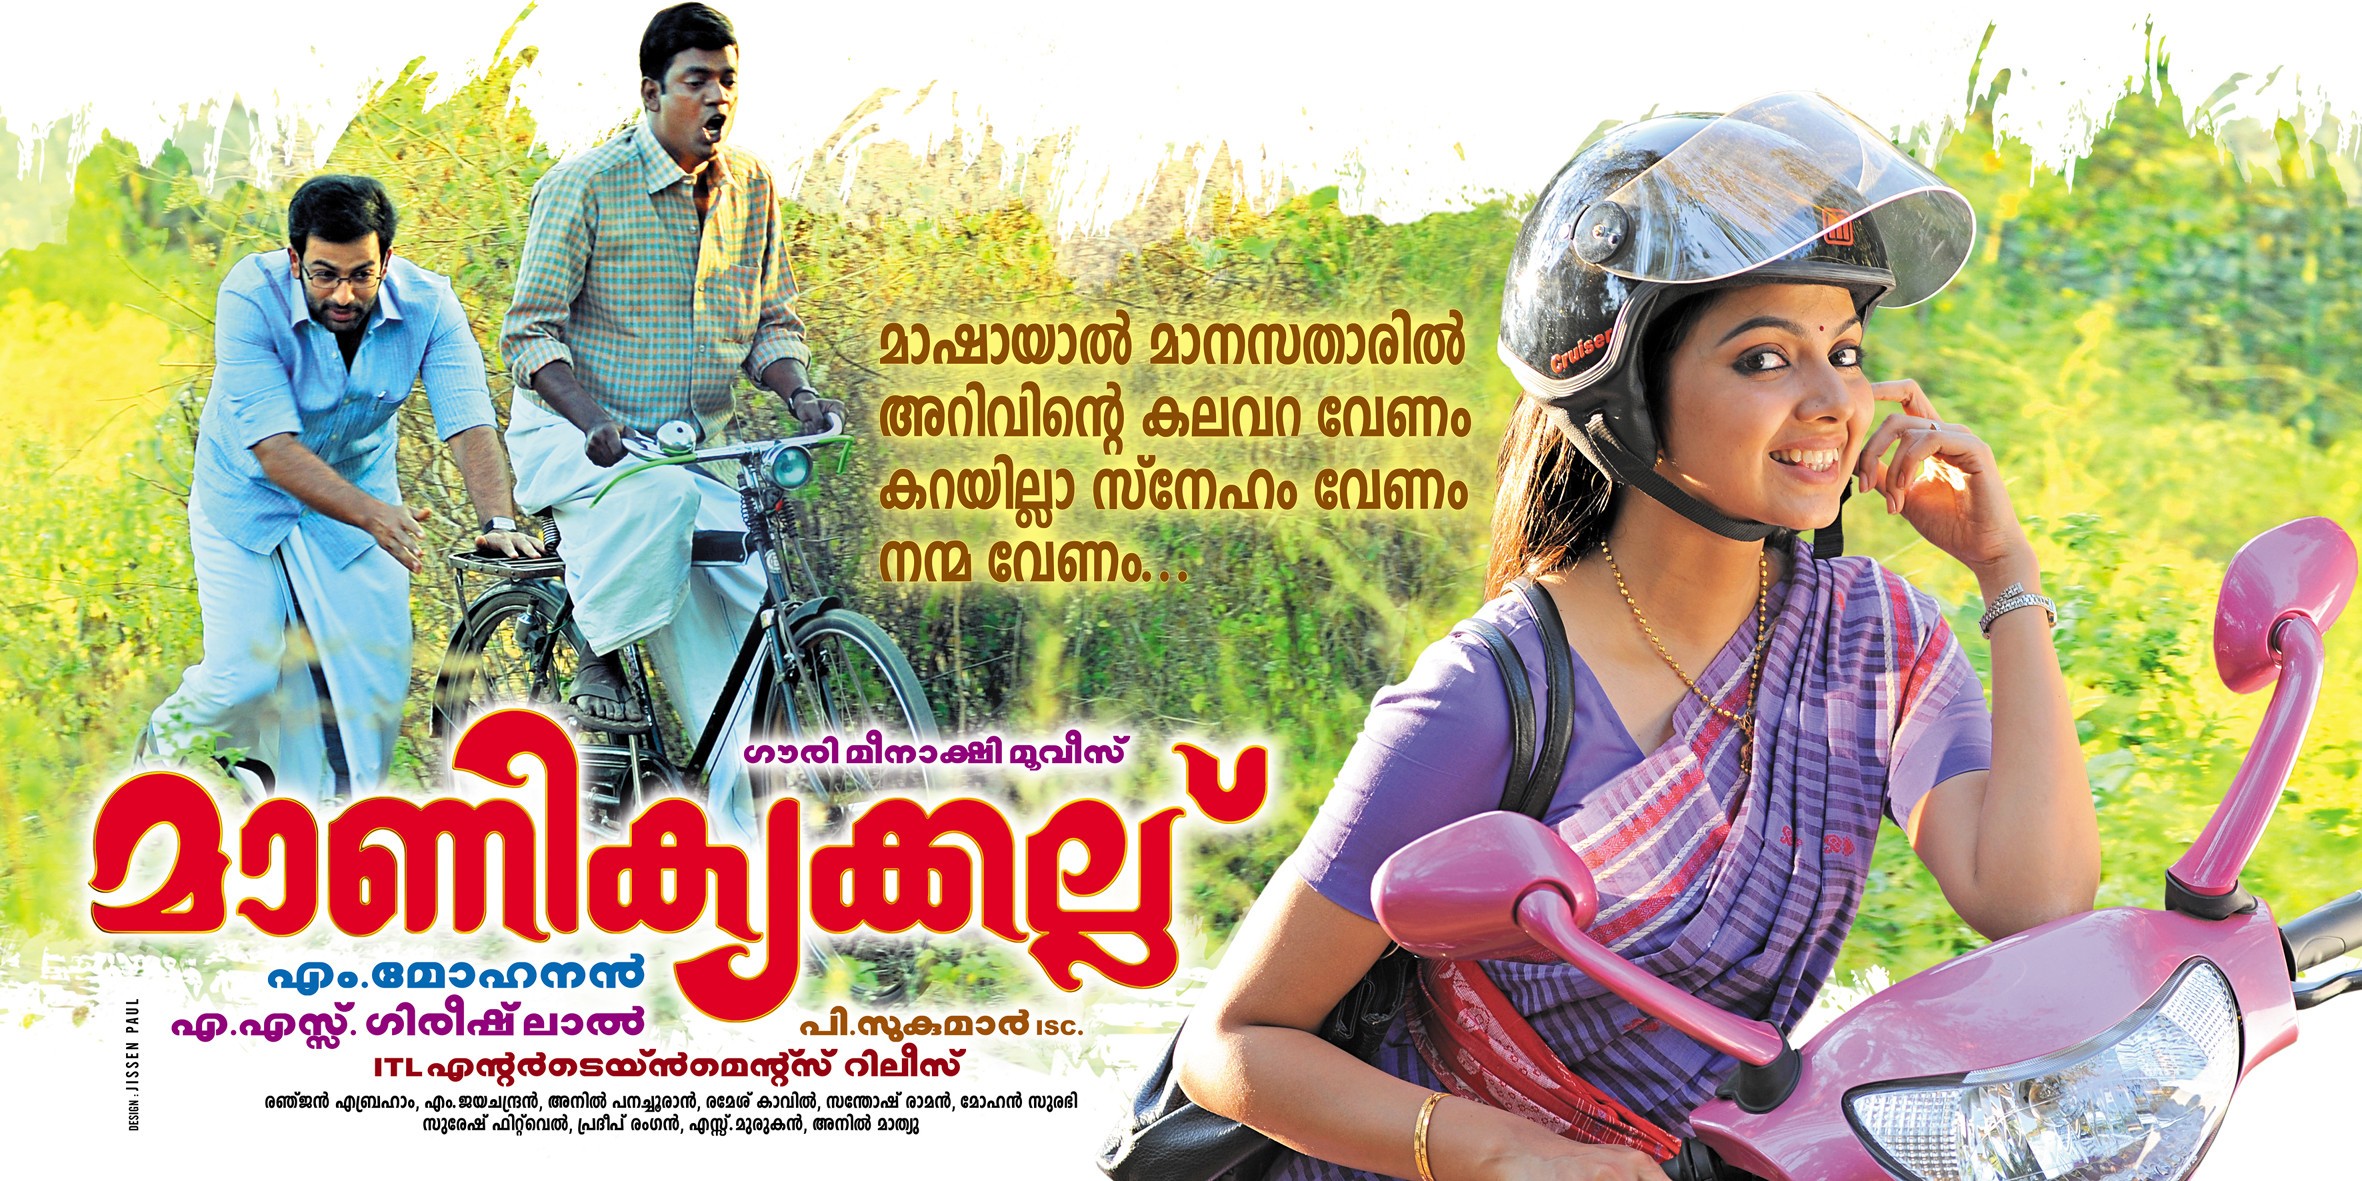 Mega Sized Movie Poster Image for Manikyakallu (#2 of 3)